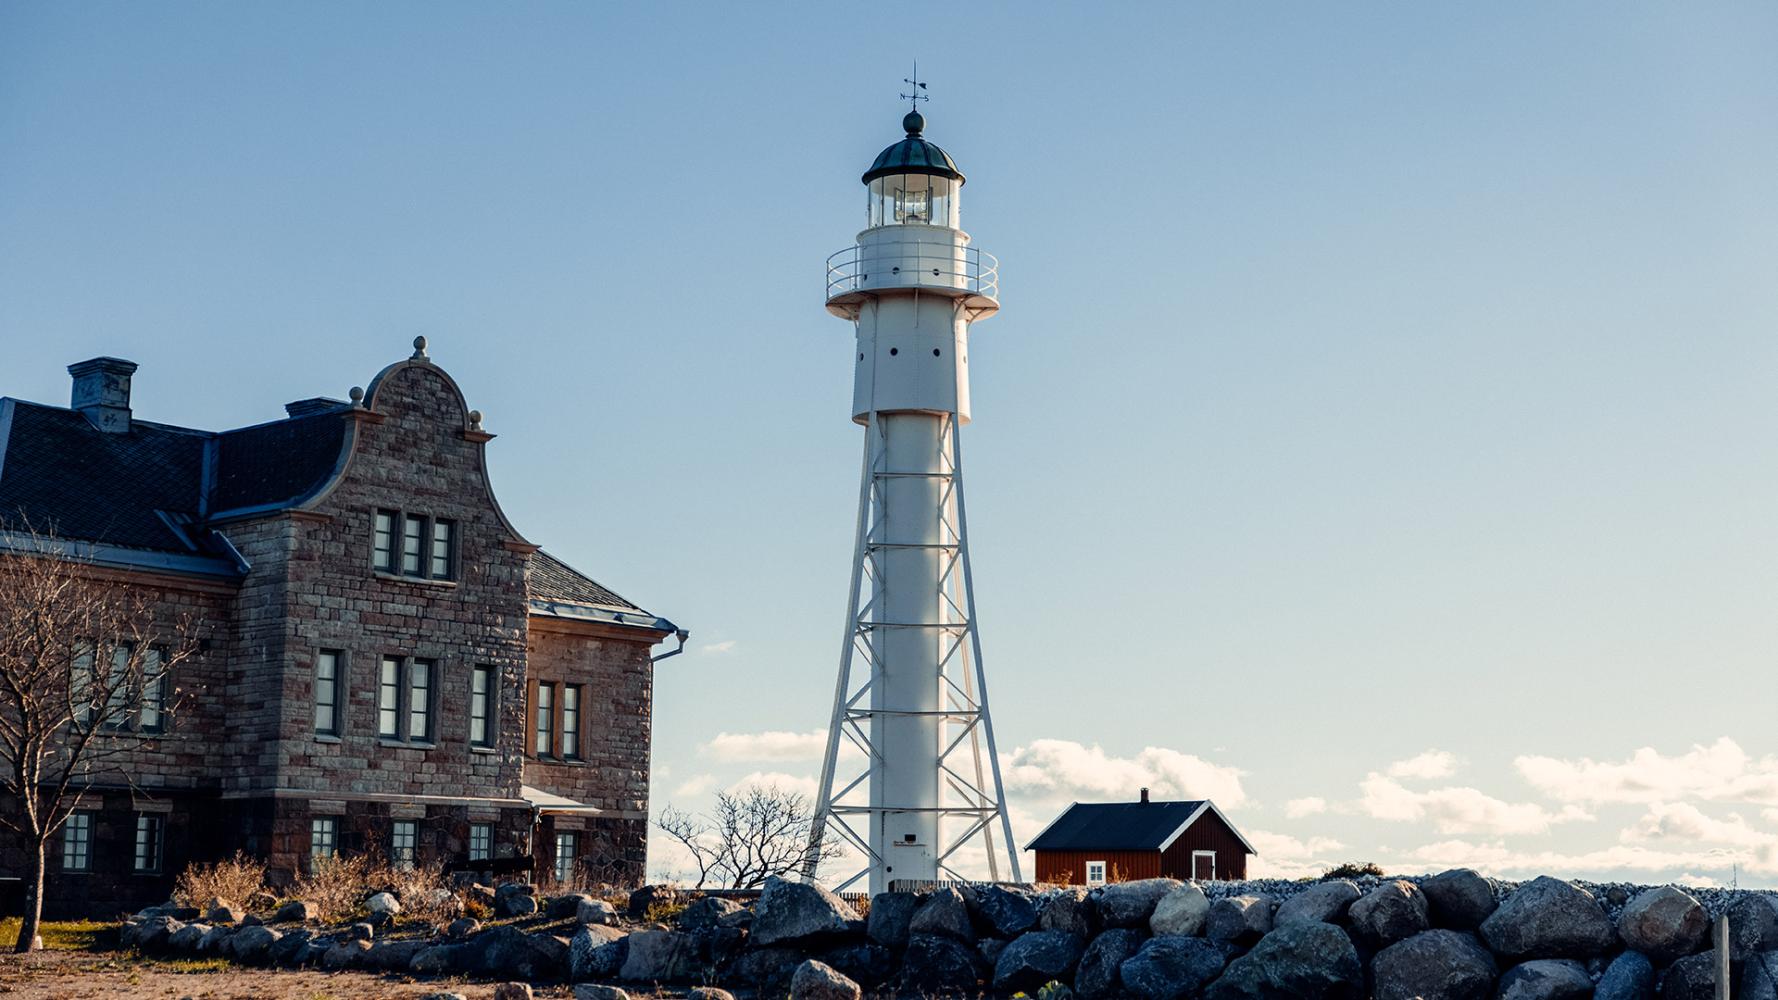 Högby lighthouse